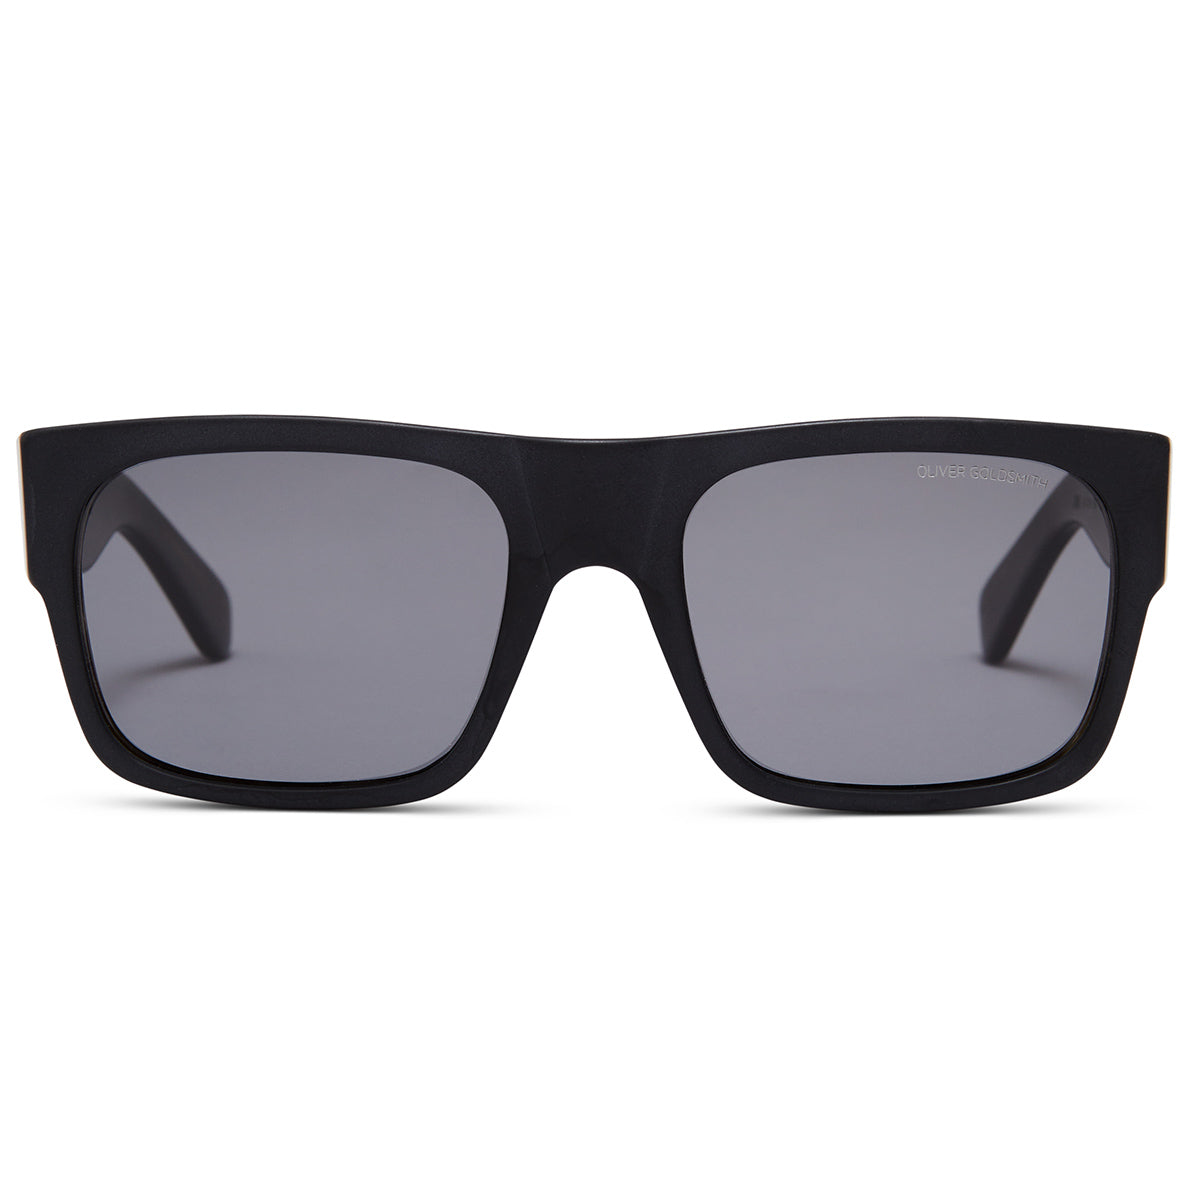 Matador Square Sunglasses | Oliver Goldsmith